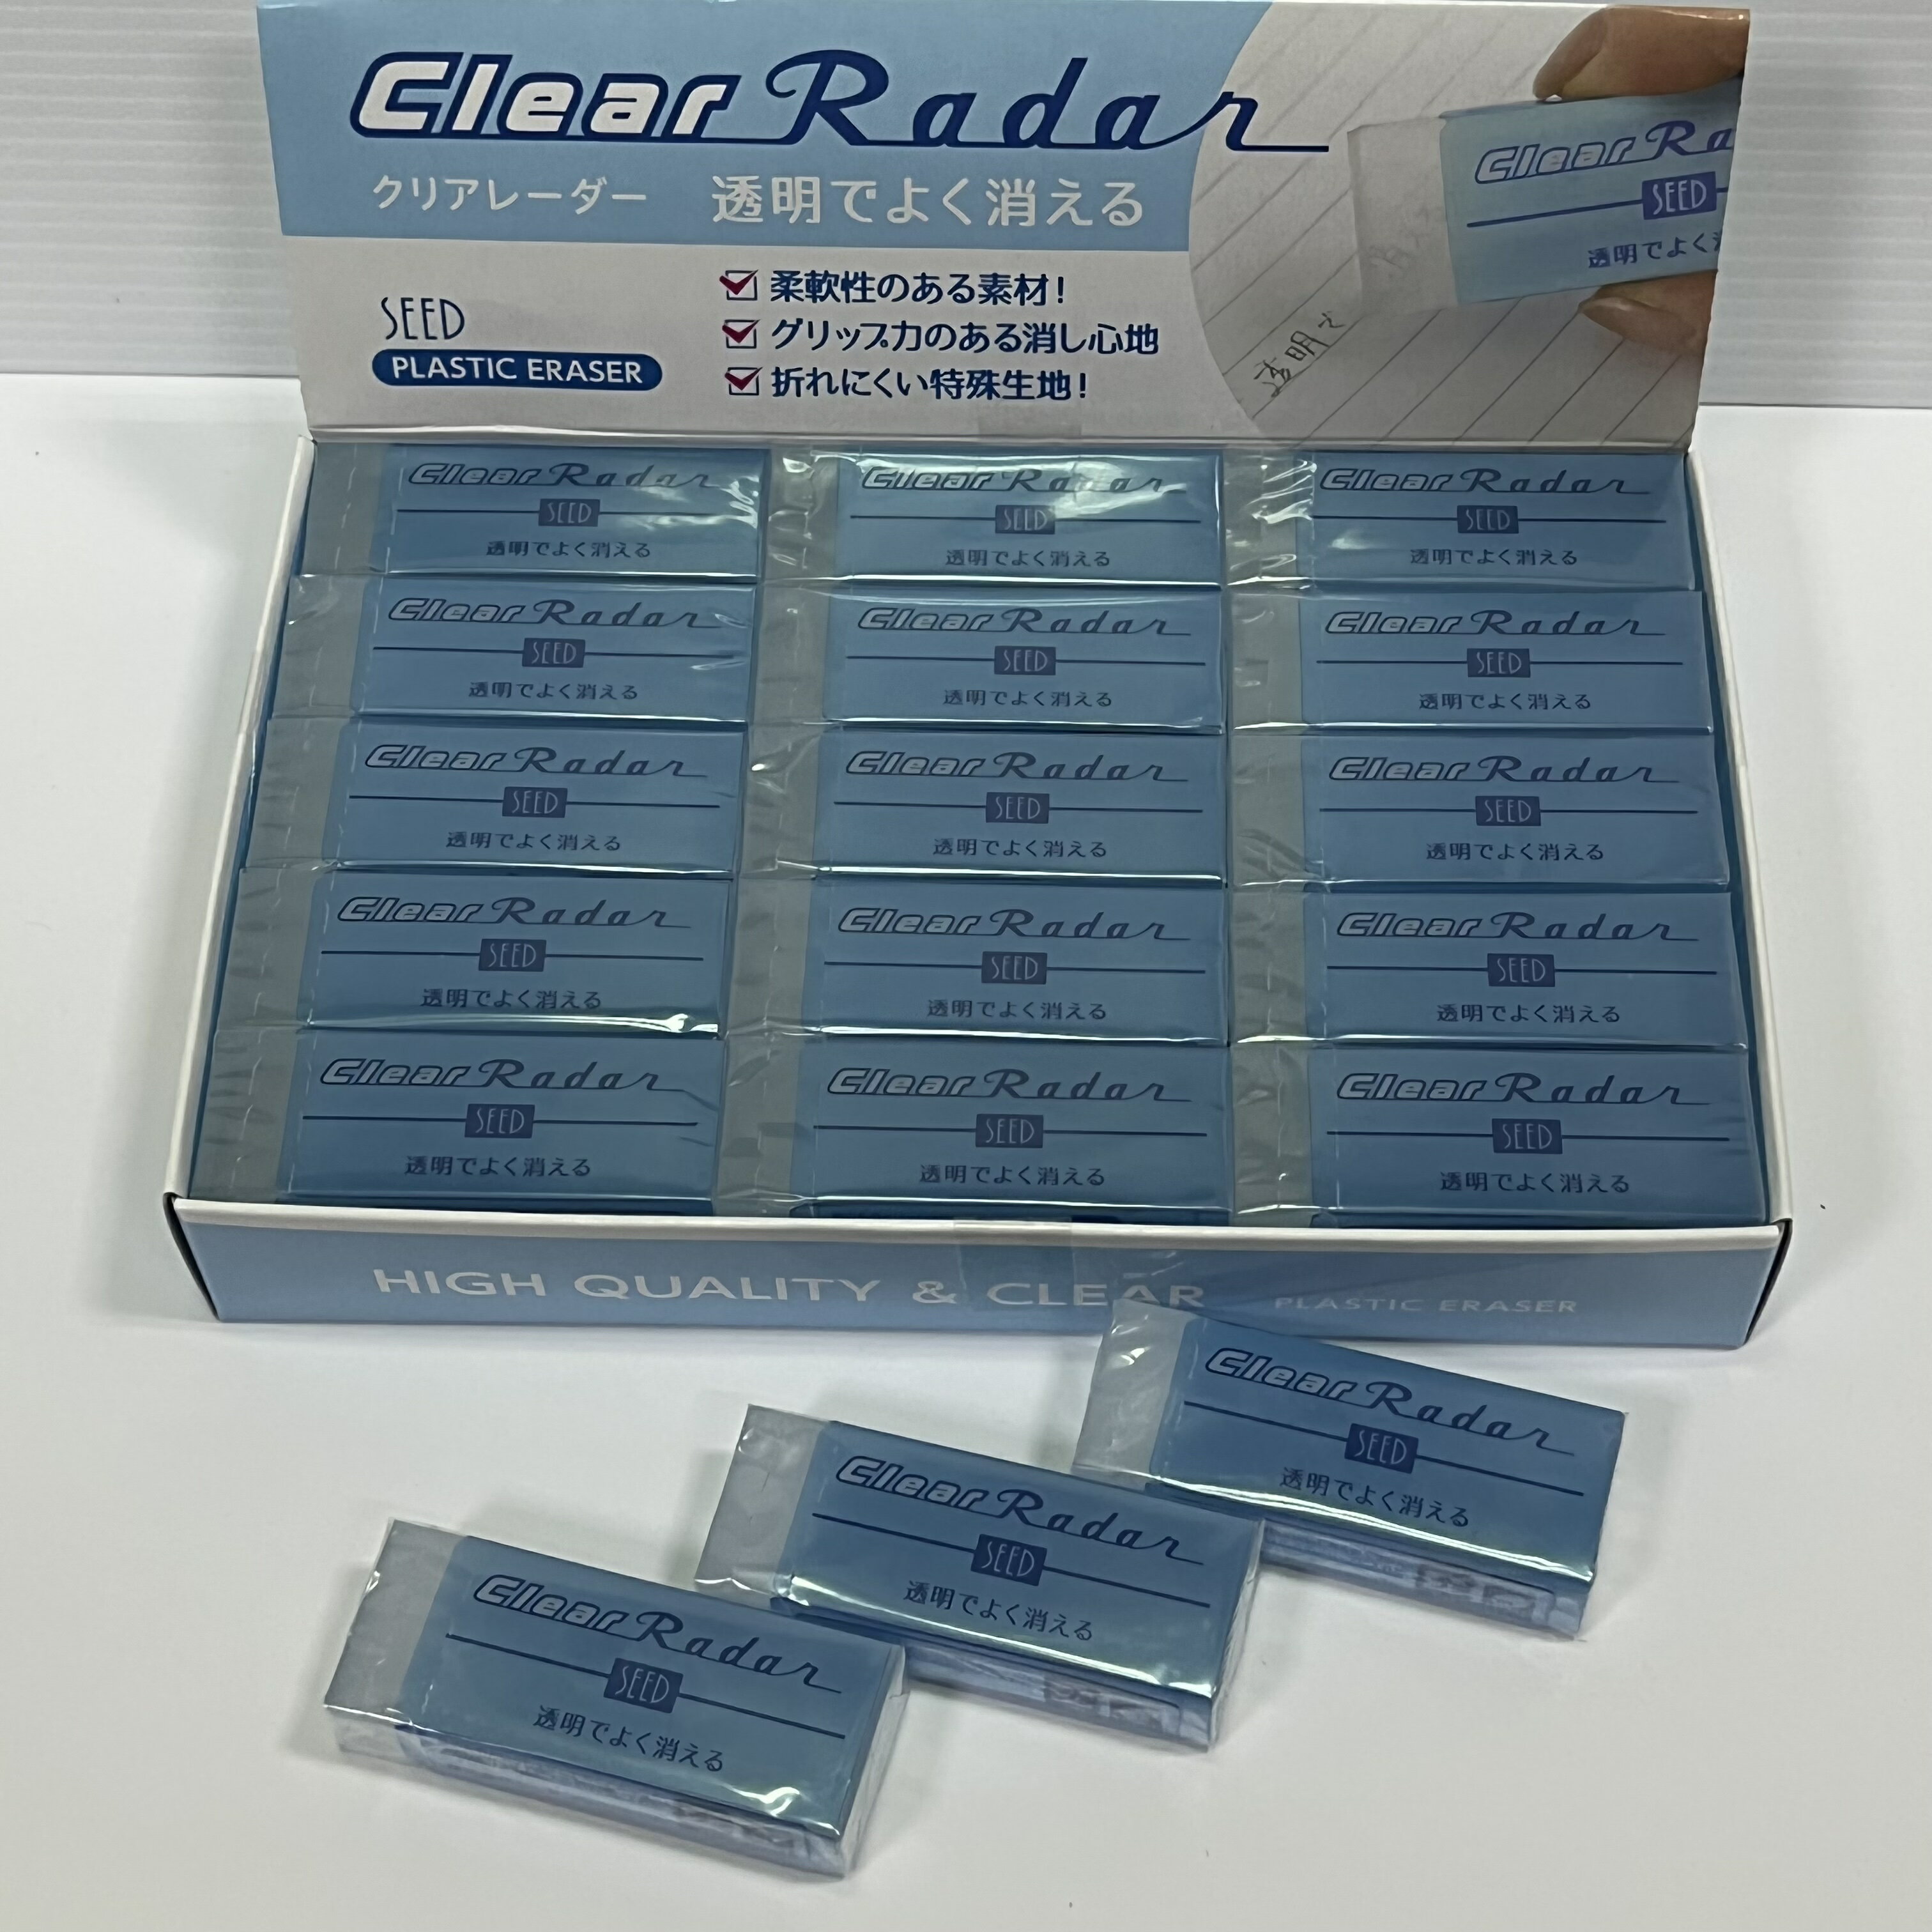 SEED雷達透明橡皮擦EP-CL150